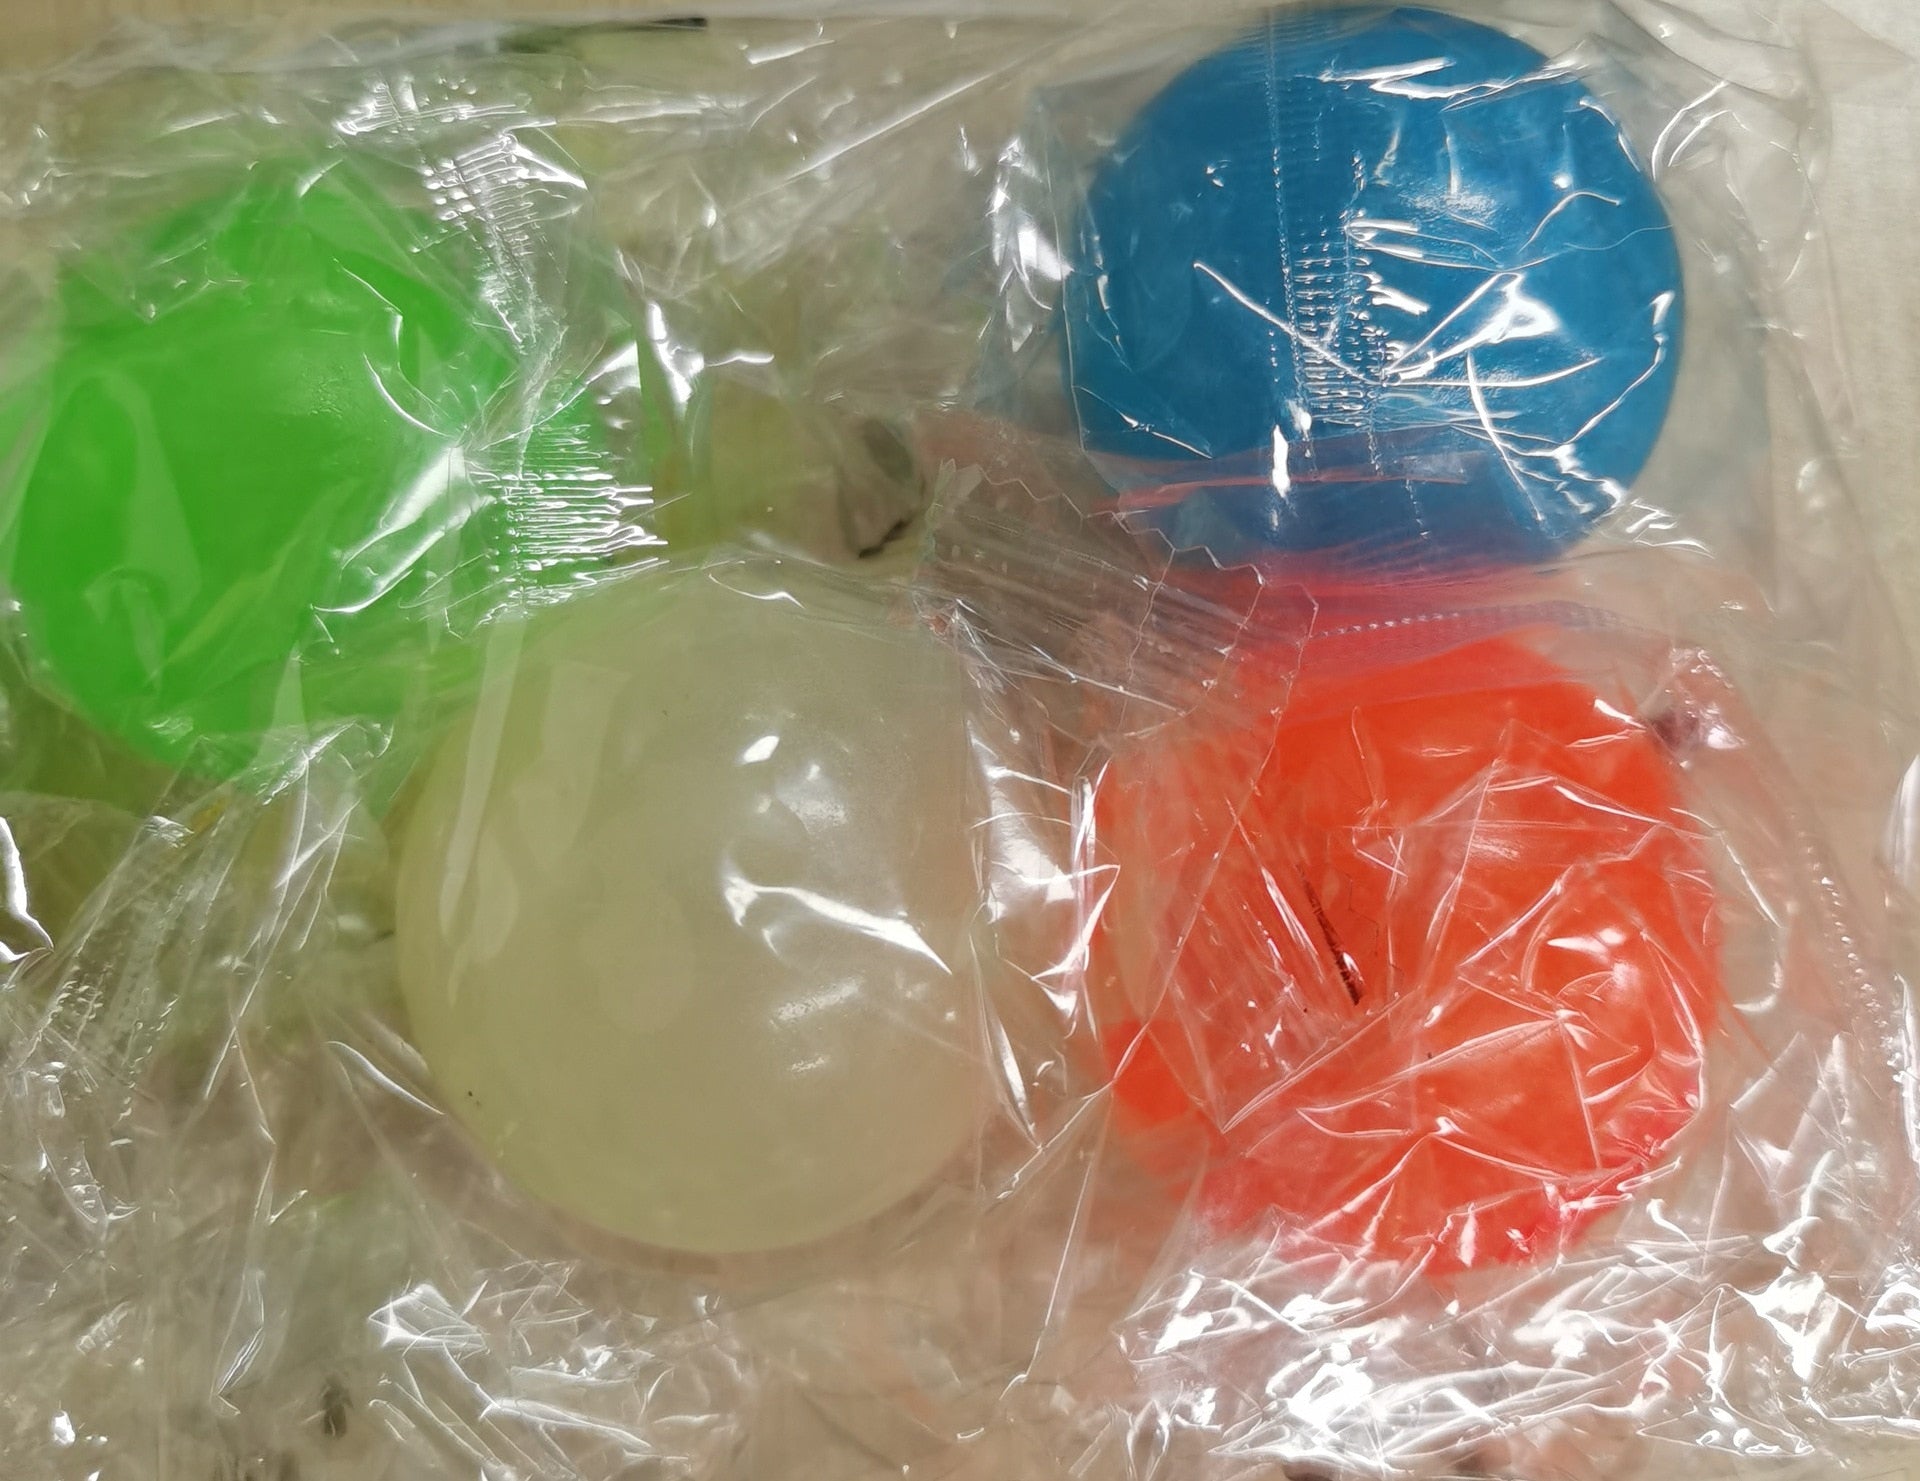 Fidget Toys Pack With Anti Stress Kit